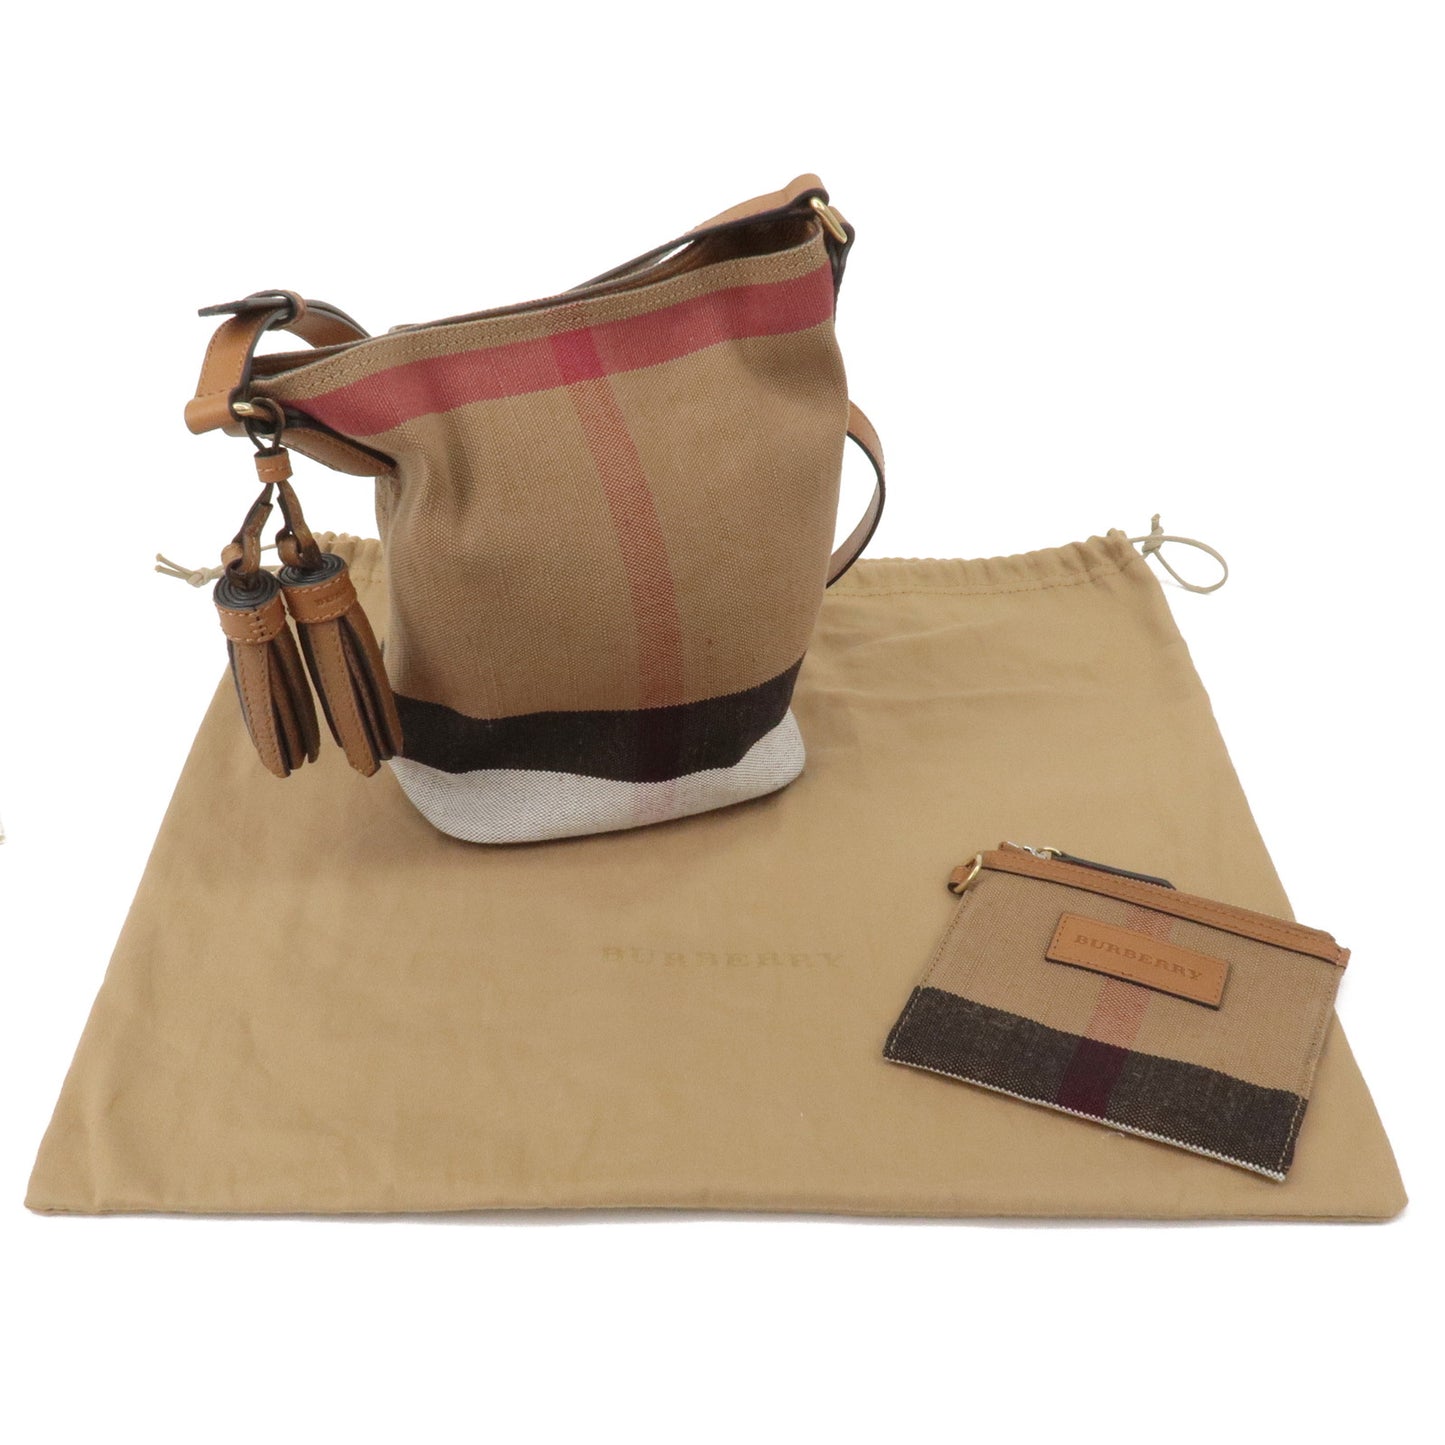 Authentic BURBERRY Nova Plaid Canvas Tassel Shoulder Bag Beige 3982933 Used F/S